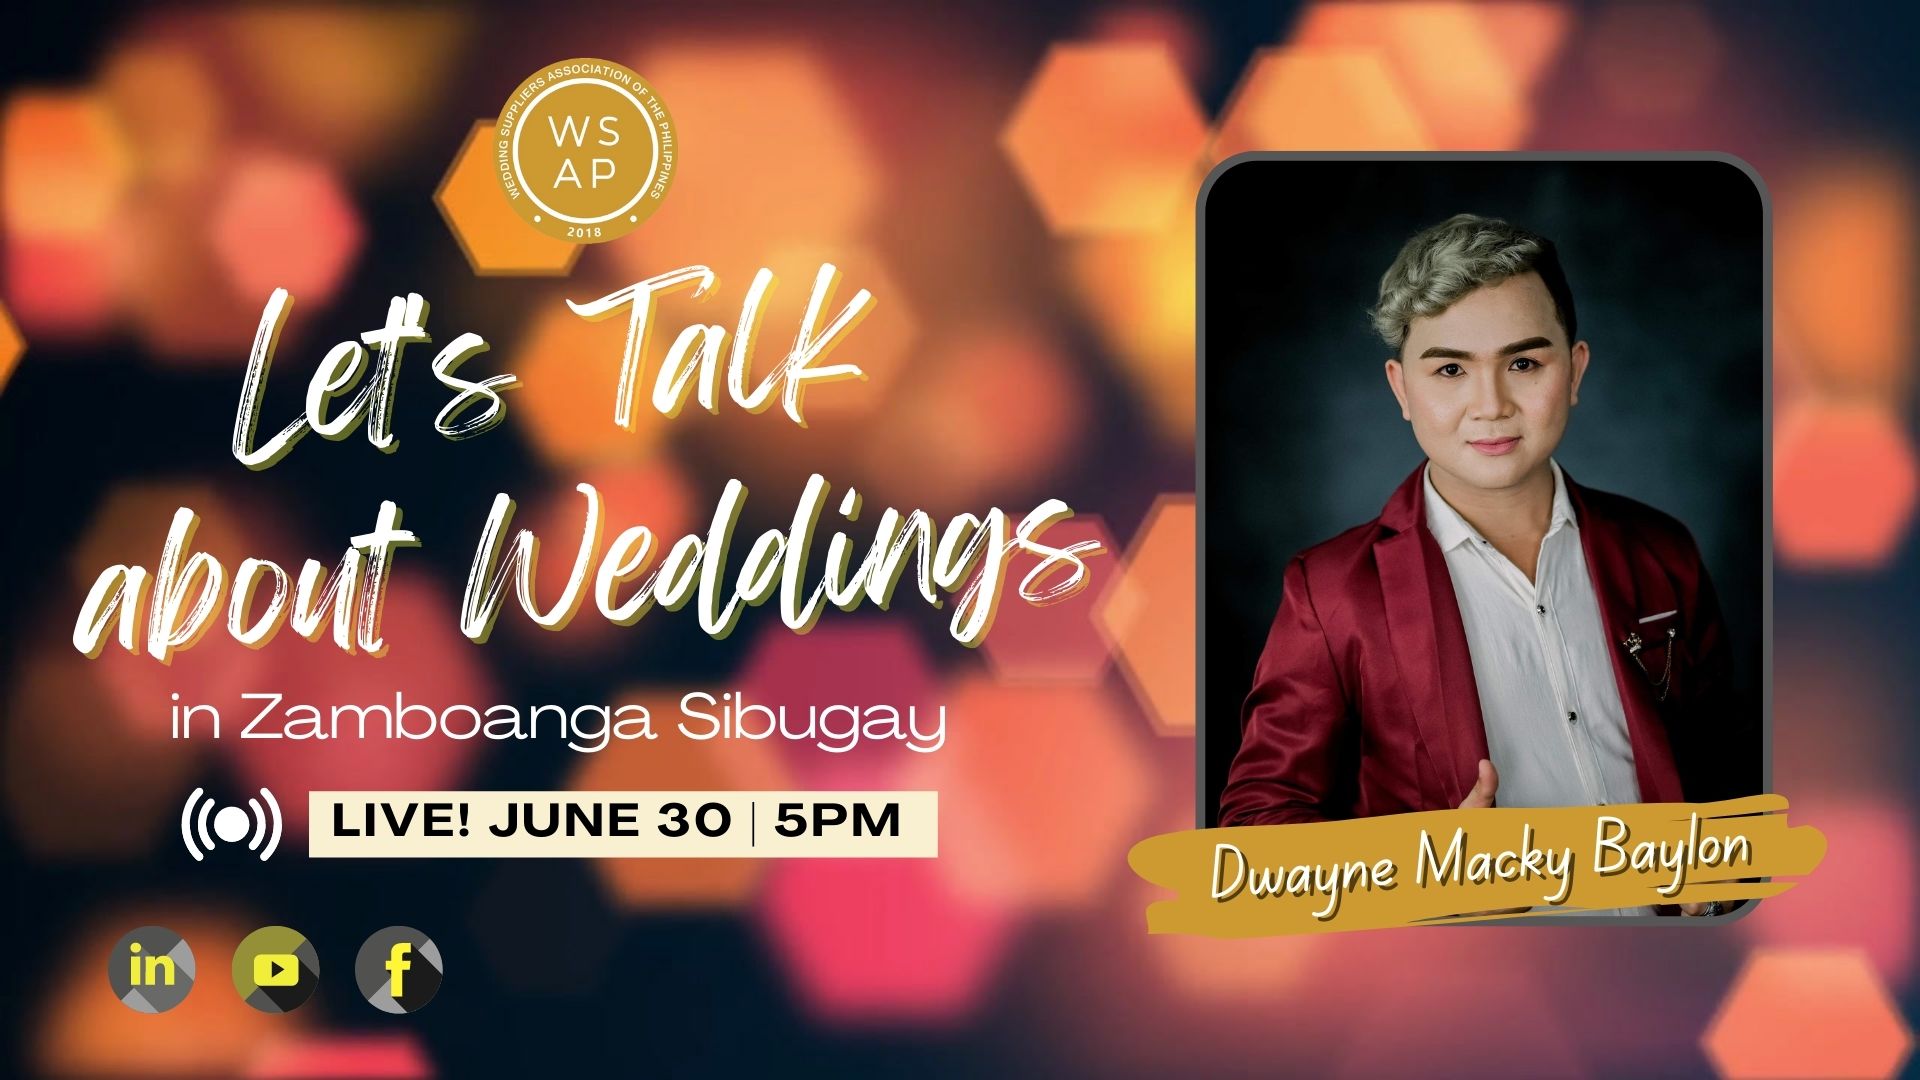 Let's Talk About Weddings in Zamboanga Sibugay with Dwayne Macky Baylon